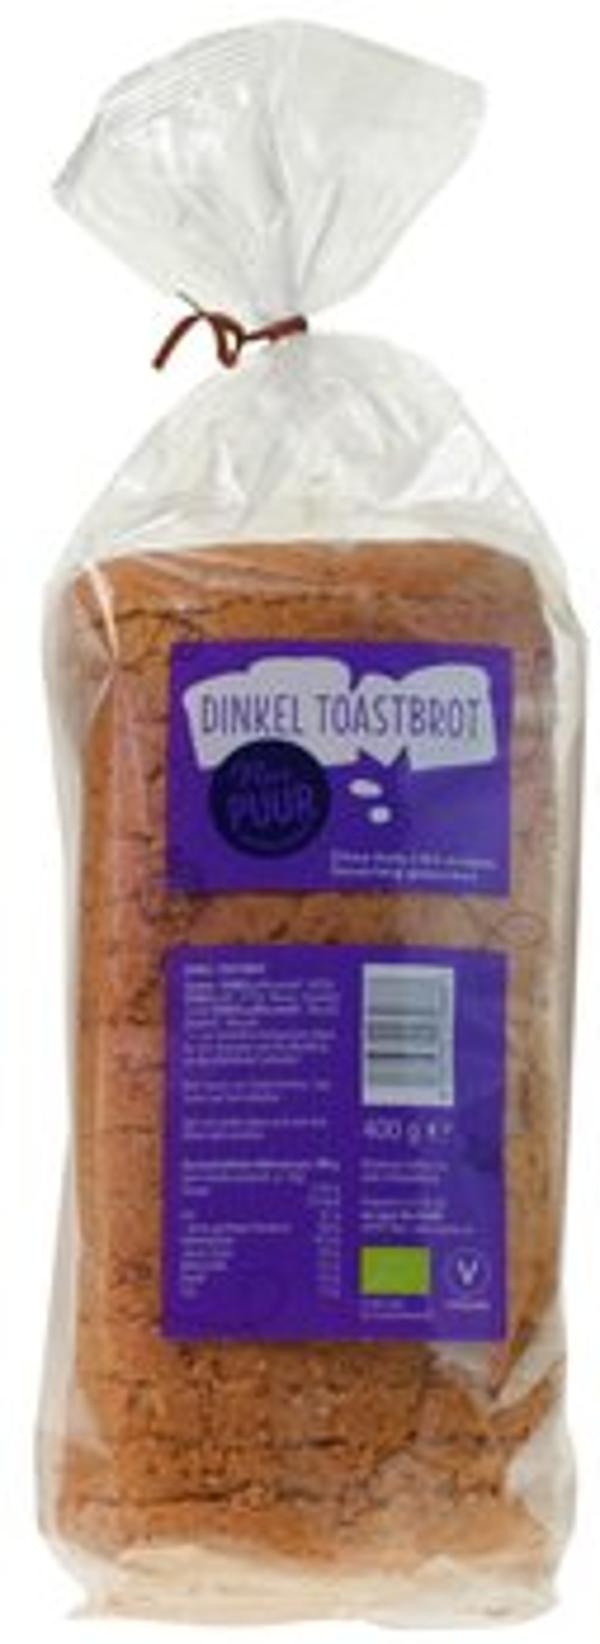 Produktfoto zu Dinkel-Toastbrot